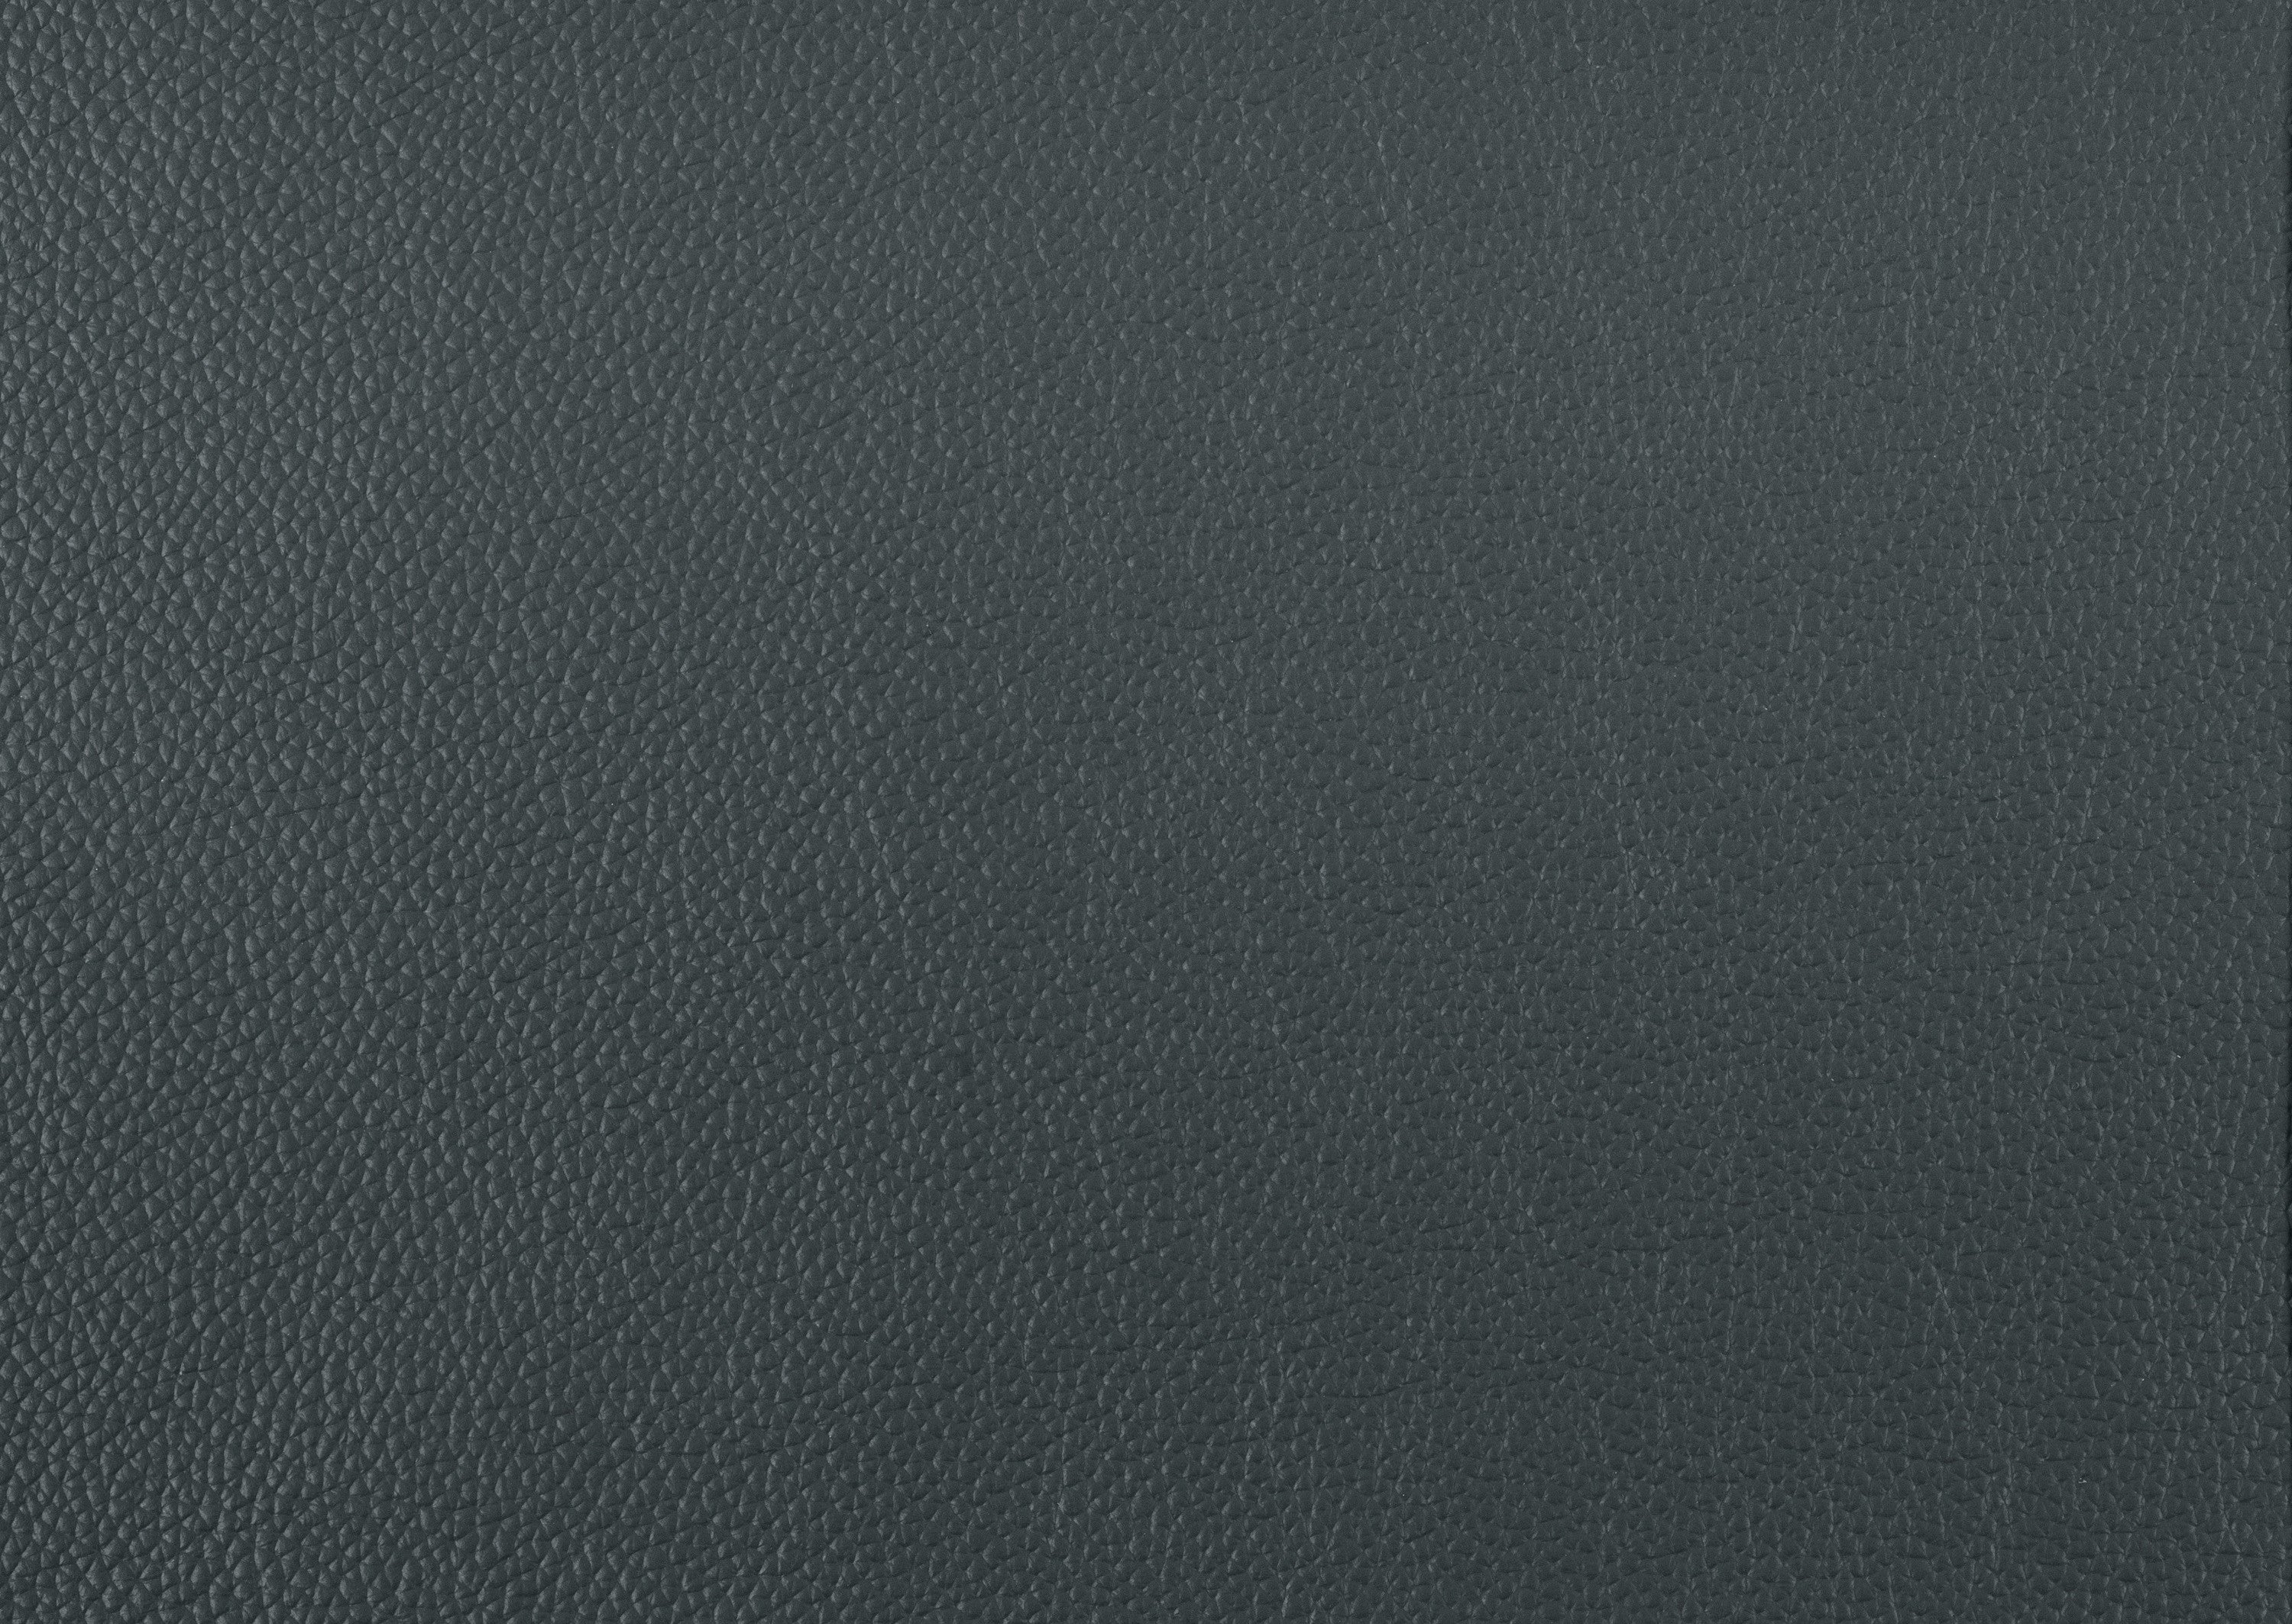 Mischa Dark Gray Top-Grain Leather Sofa - 9514DGY-3 - Bien Home Furniture &amp; Electronics